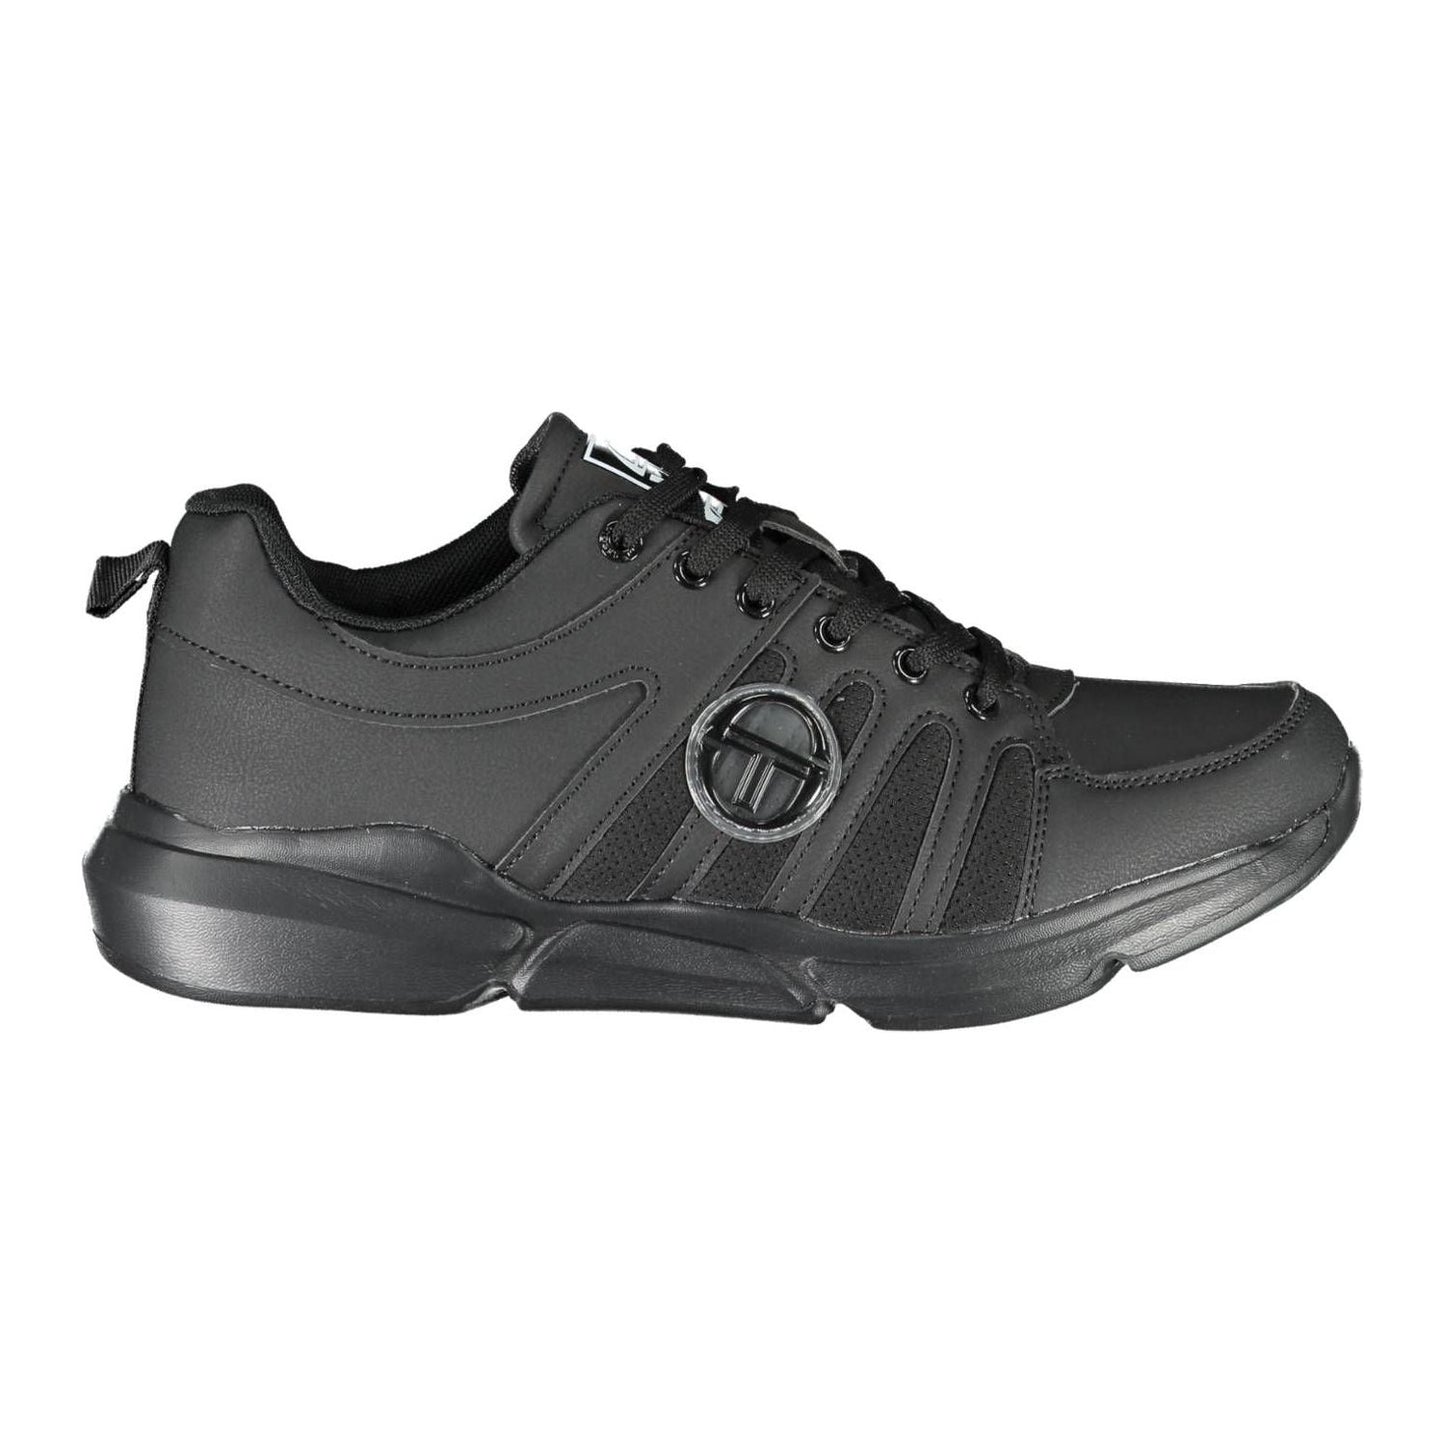 Sergio Tacchini Sleek Black Sports Sneakers with Contrasting Details sleek-black-sports-sneakers-with-contrasting-details